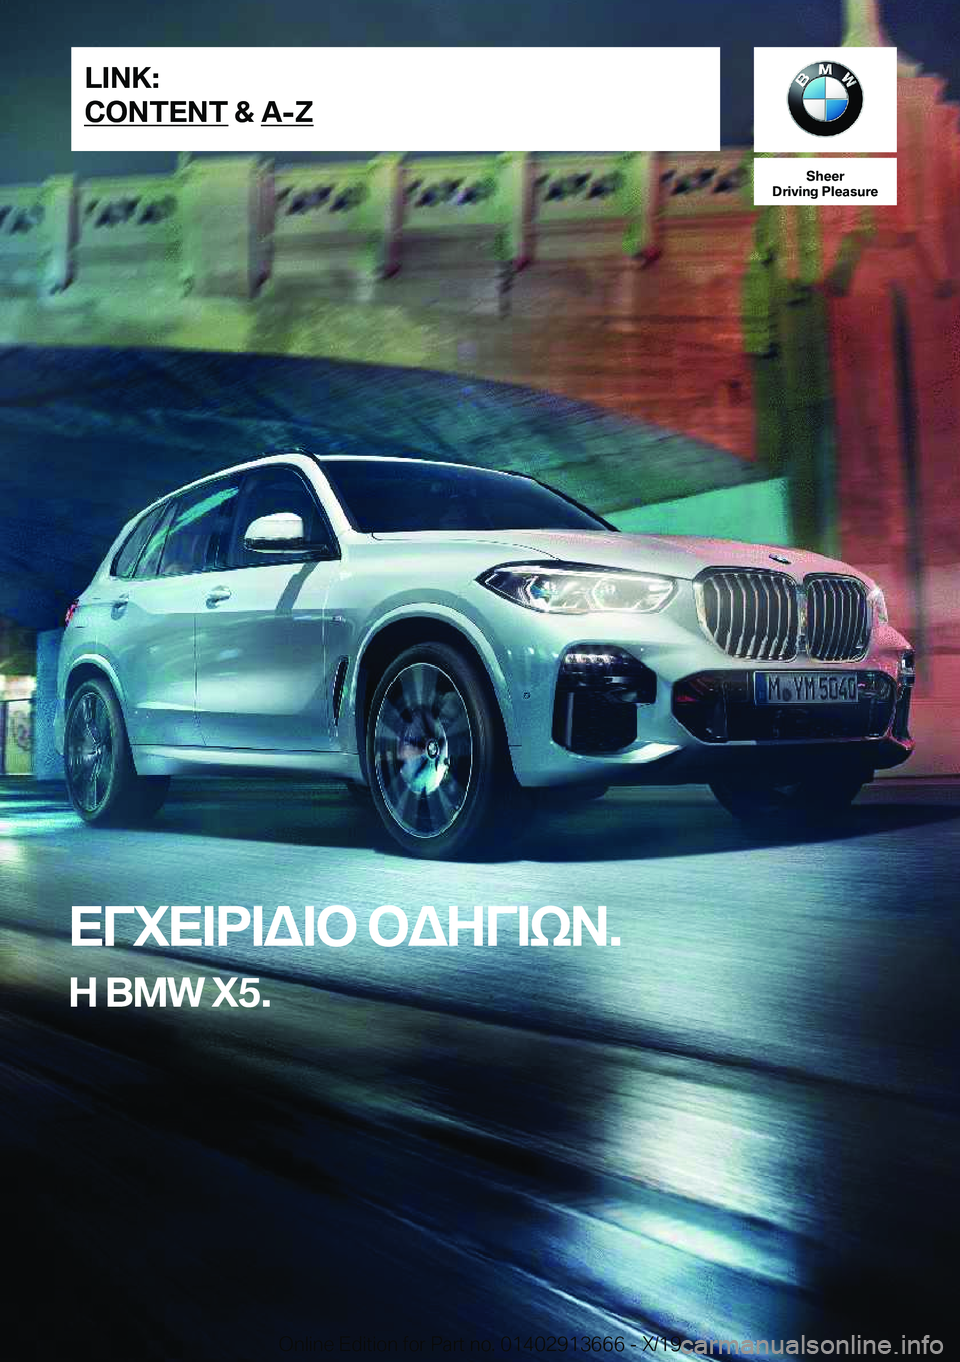 BMW X5 2020  ΟΔΗΓΌΣ ΧΡΉΣΗΣ (in Greek) �S�h�e�e�r
�D�r�i�v�i�n�g��P�l�e�a�s�u�r�e
XViX=d=W=b�bWZV=kA�.
Z��B�M�W��X�5�.�L�I�N�K�:
�C�O�N�T�E�N�T��&��A�-�Z�O�n�l�i�n�e��E�d�i�t�i�o�n��f�o�r��P�a�r�t��n�o�.��0�1�4